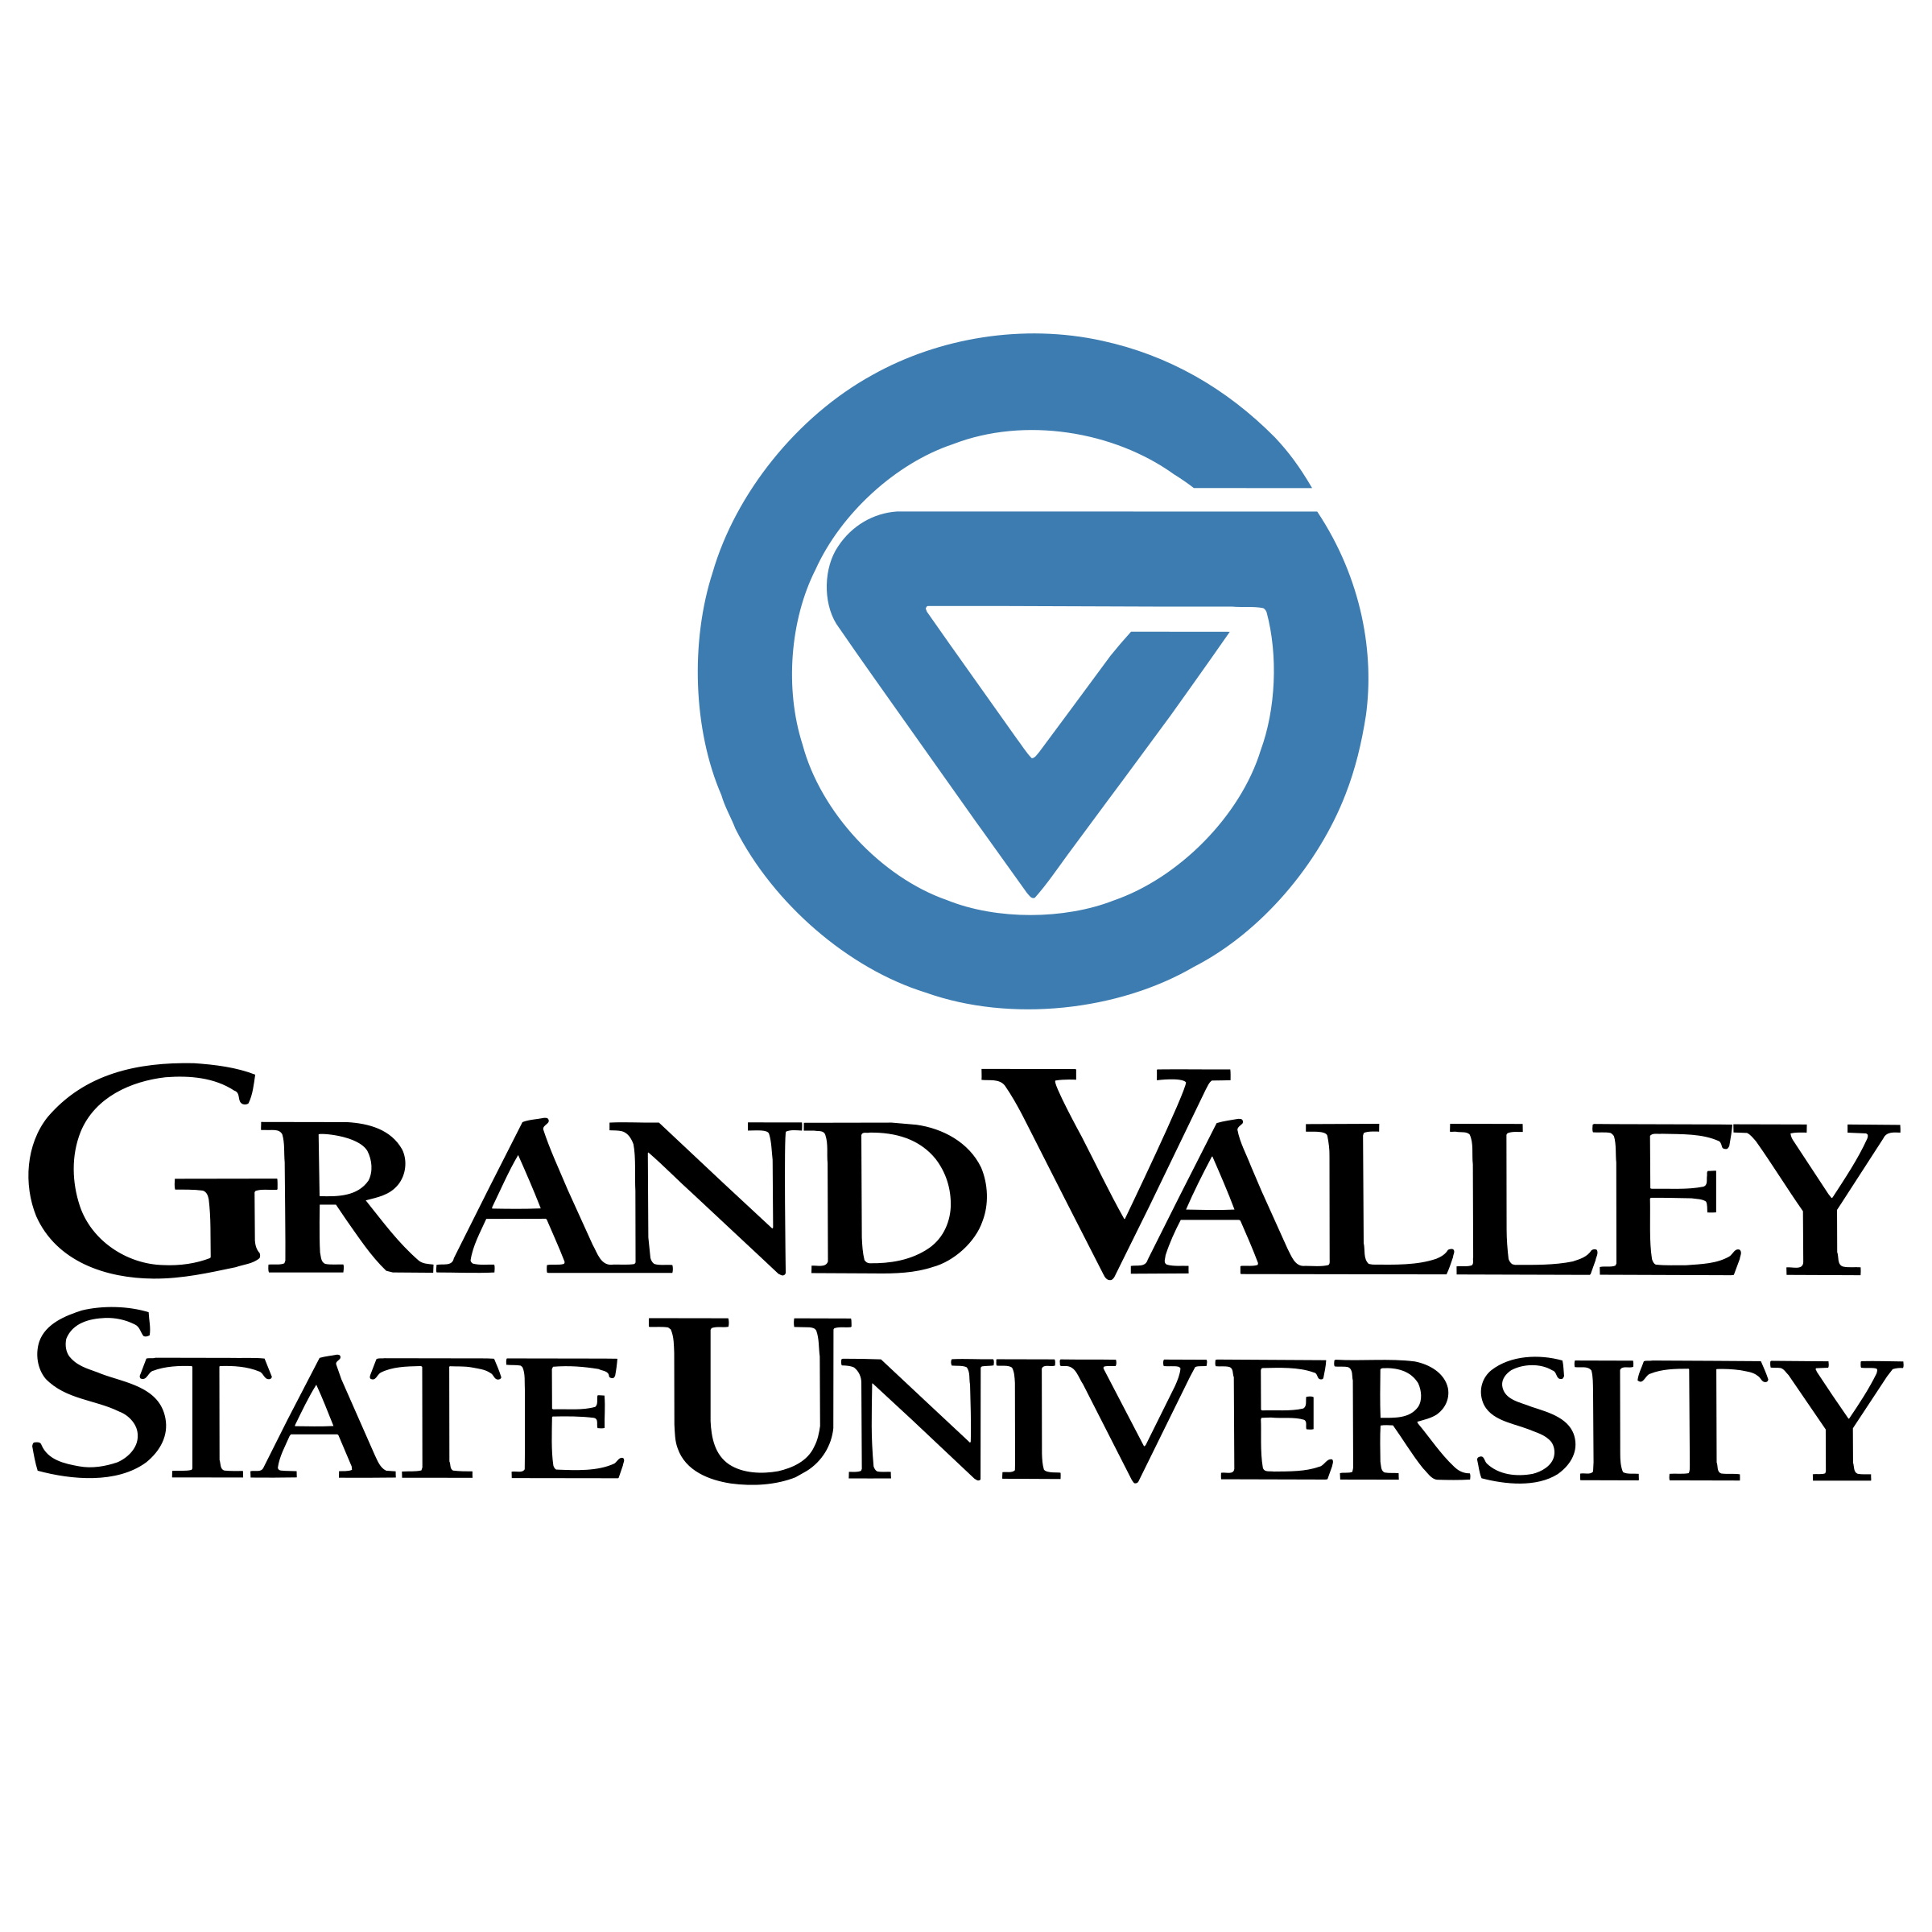 GVSU Logo - Grand Valley State University Logo PNG Transparent & SVG Vector ...